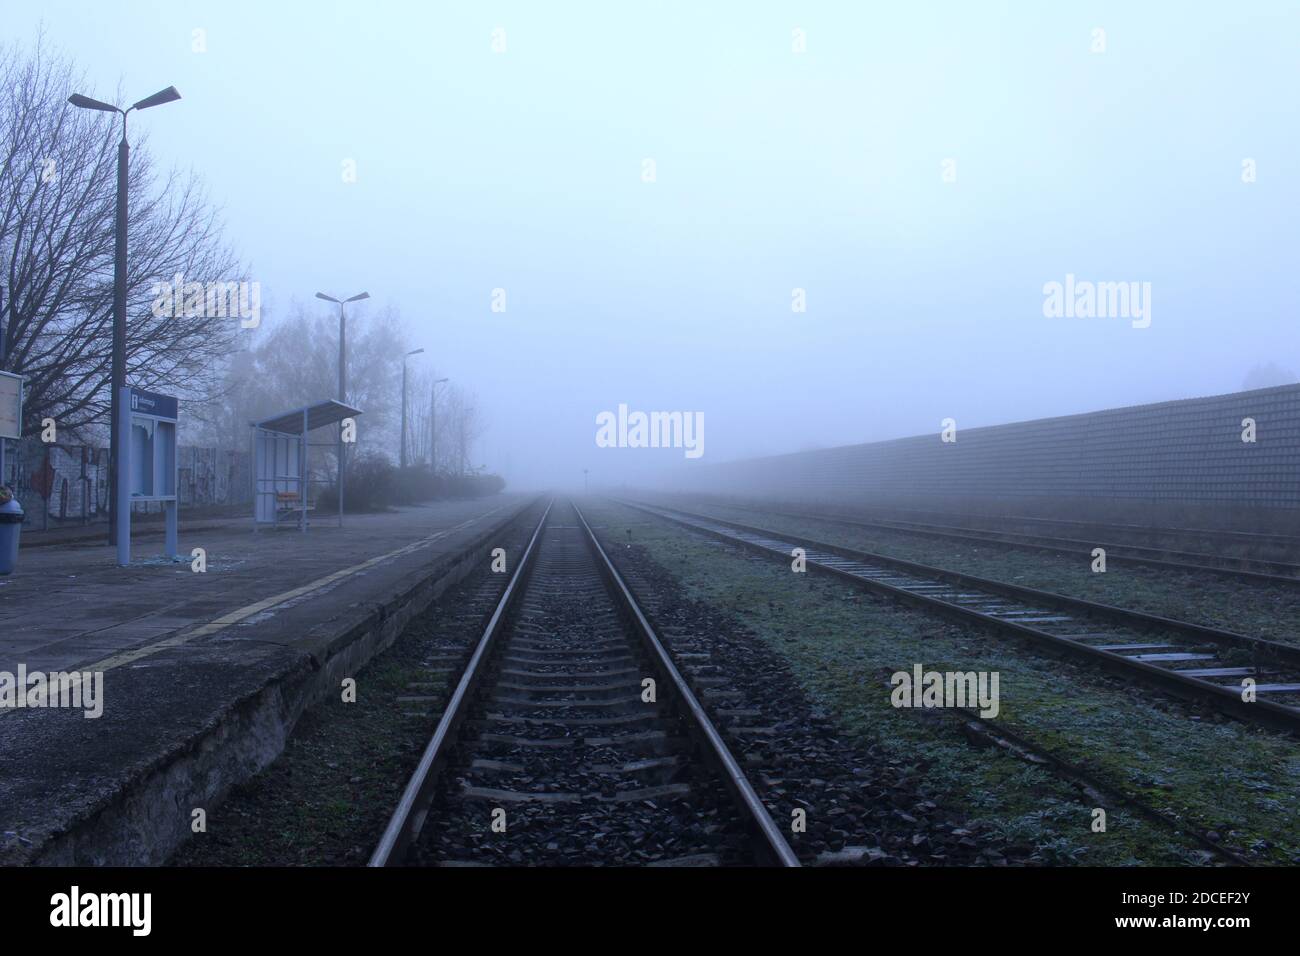 Train station in Białystok during foggy weather Stock Photo